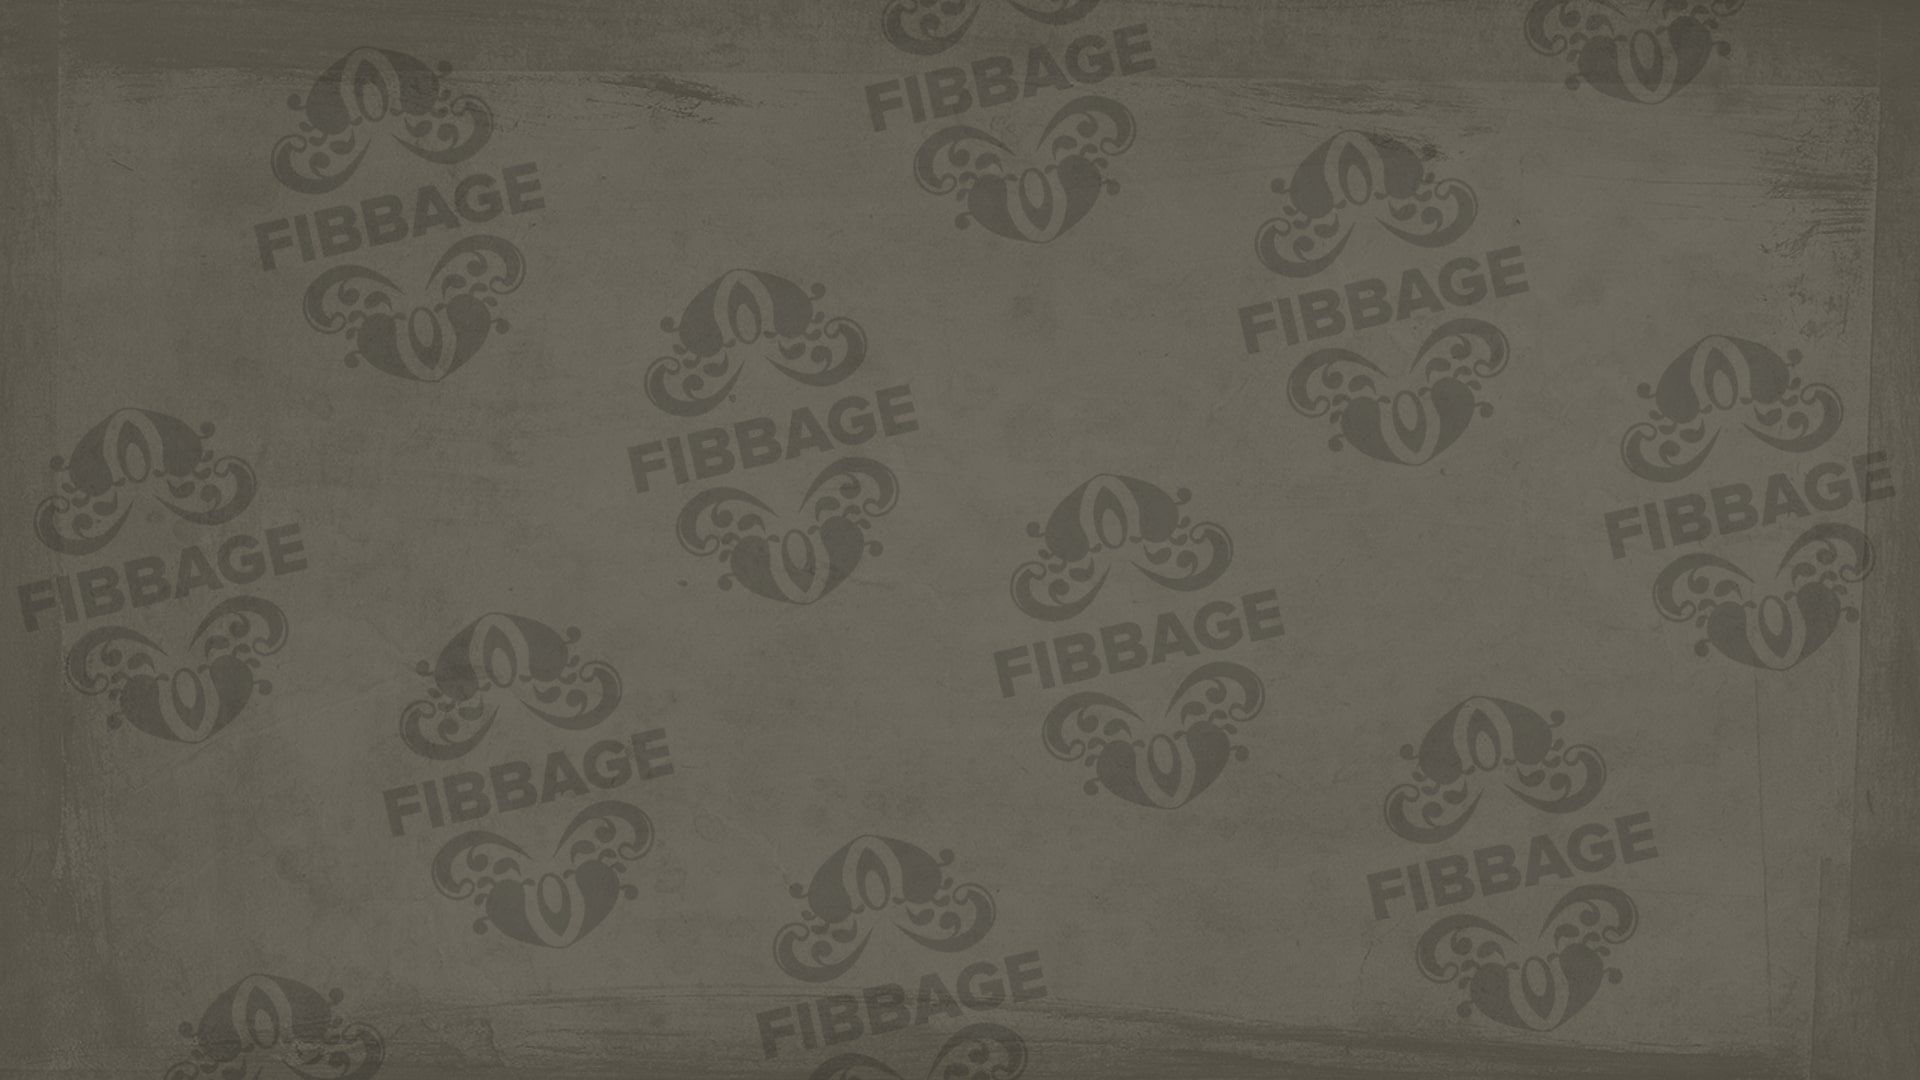 Fibbage cover image